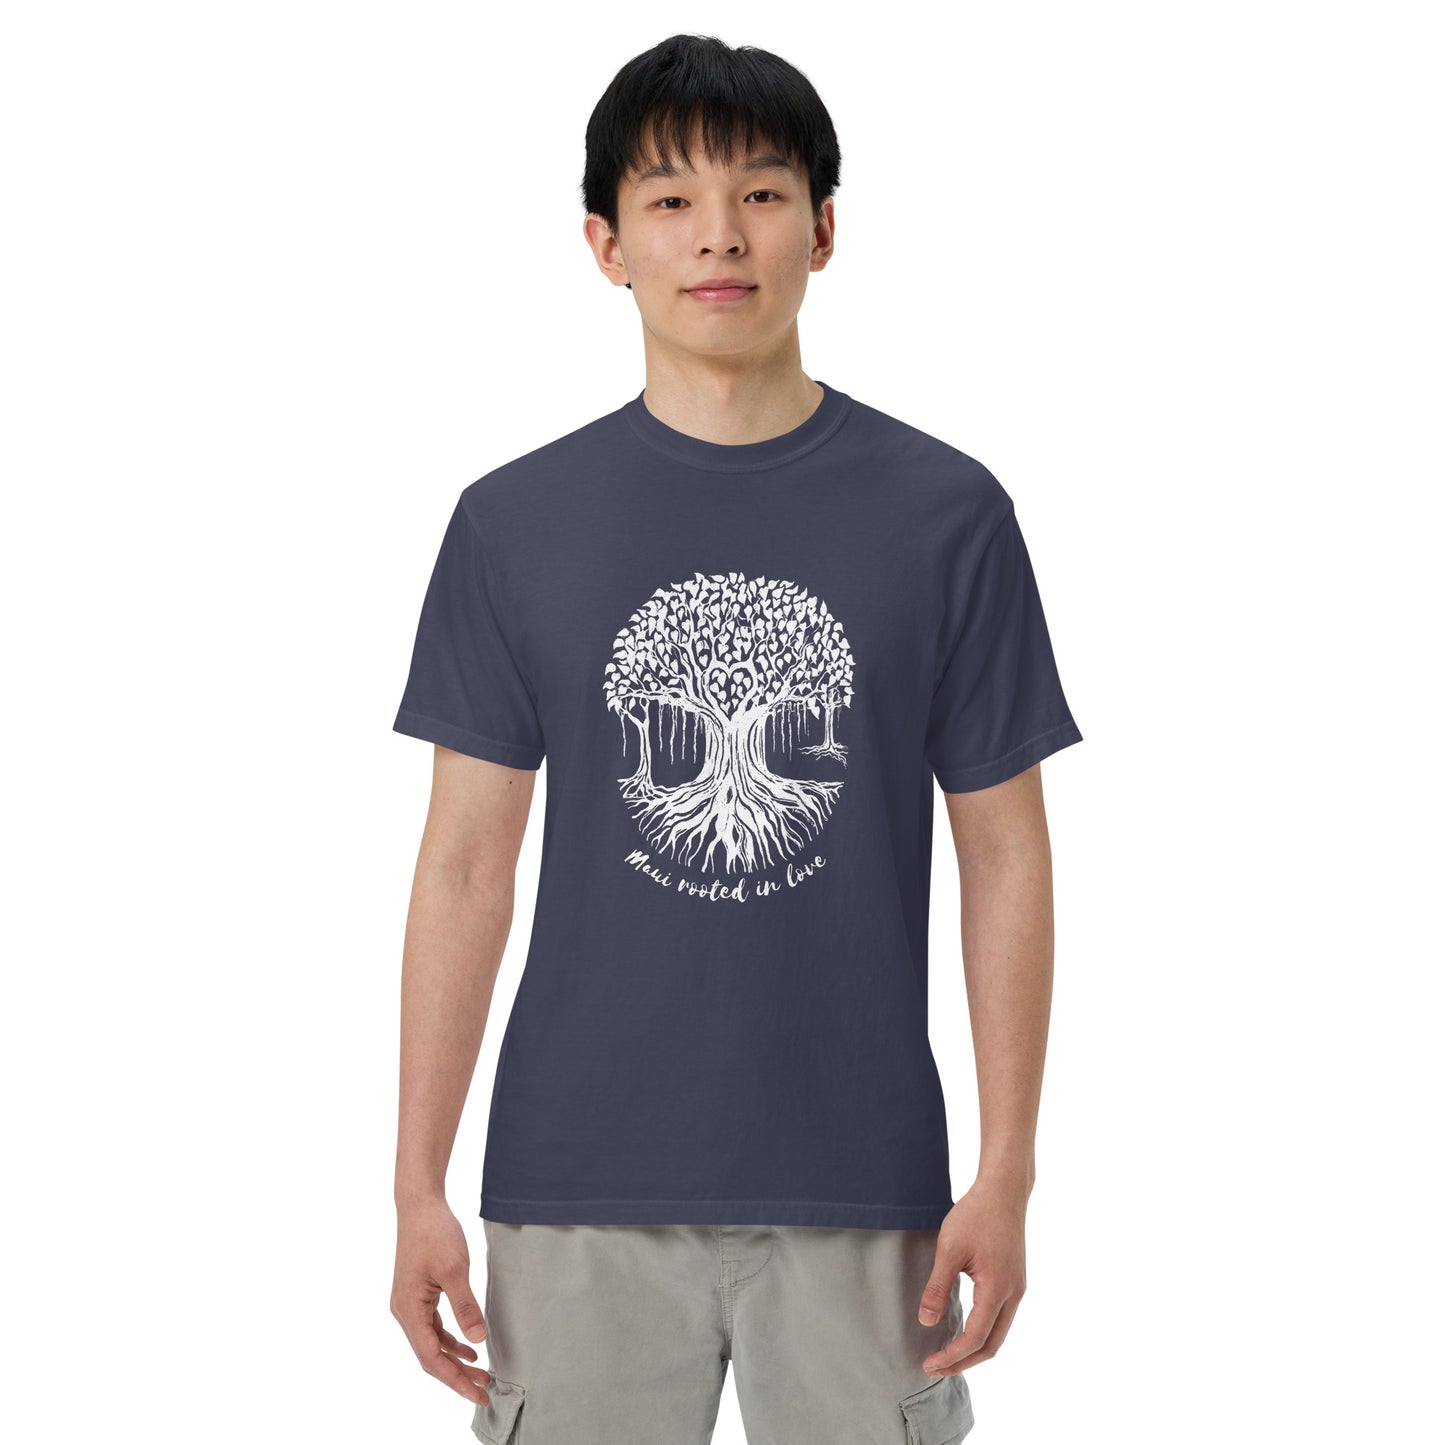 Unisex garment-dyed heavyweight t-shirt with Maui Banyan Tree